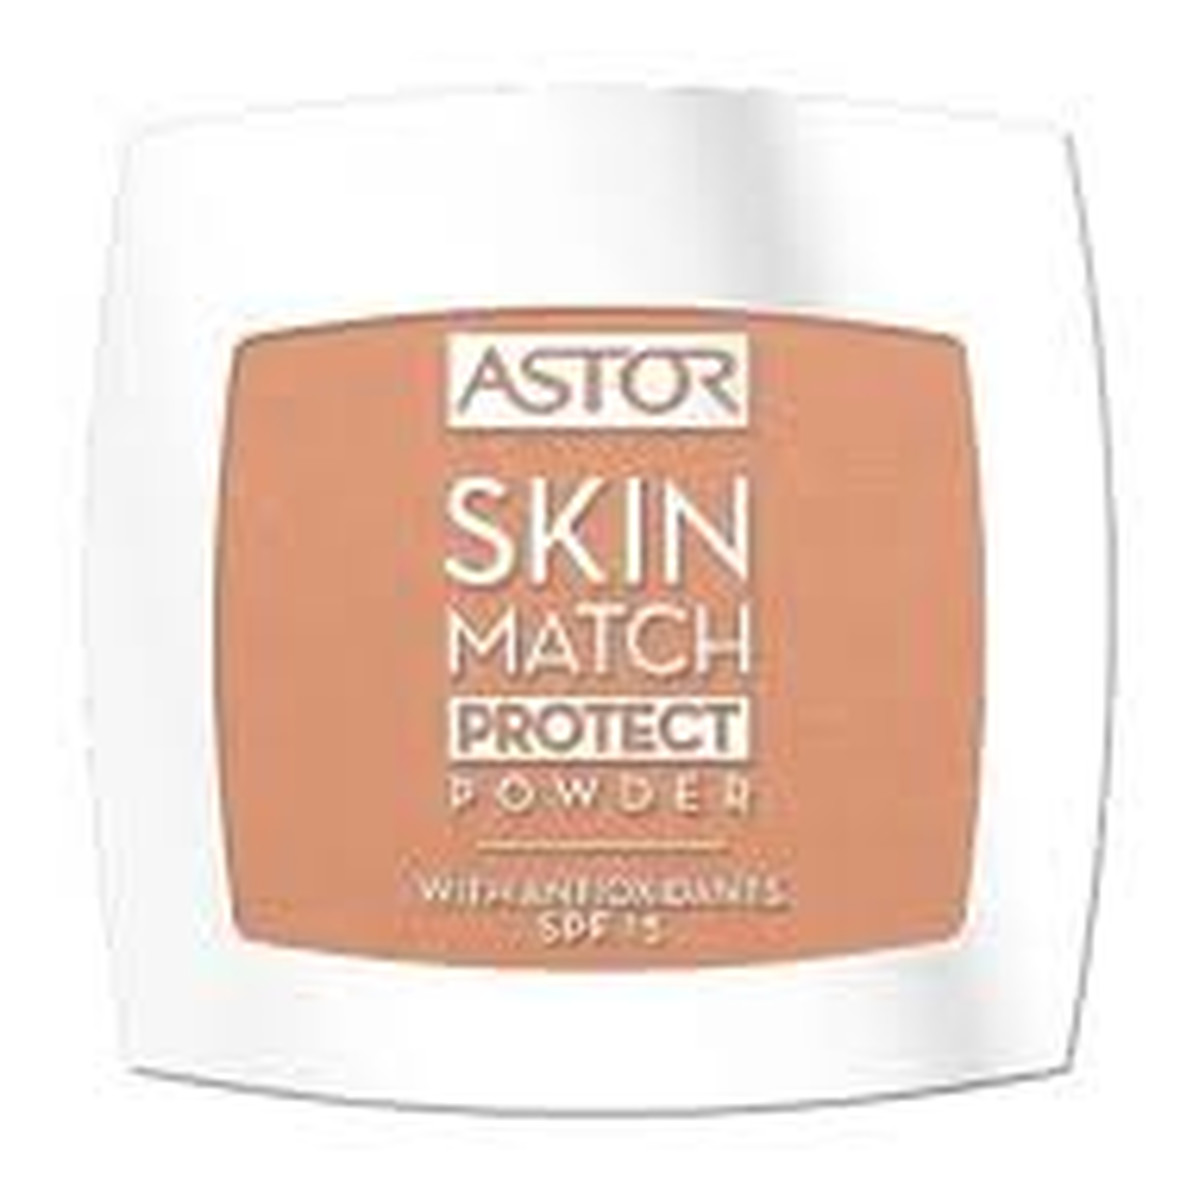 Astor Skin Match Puder